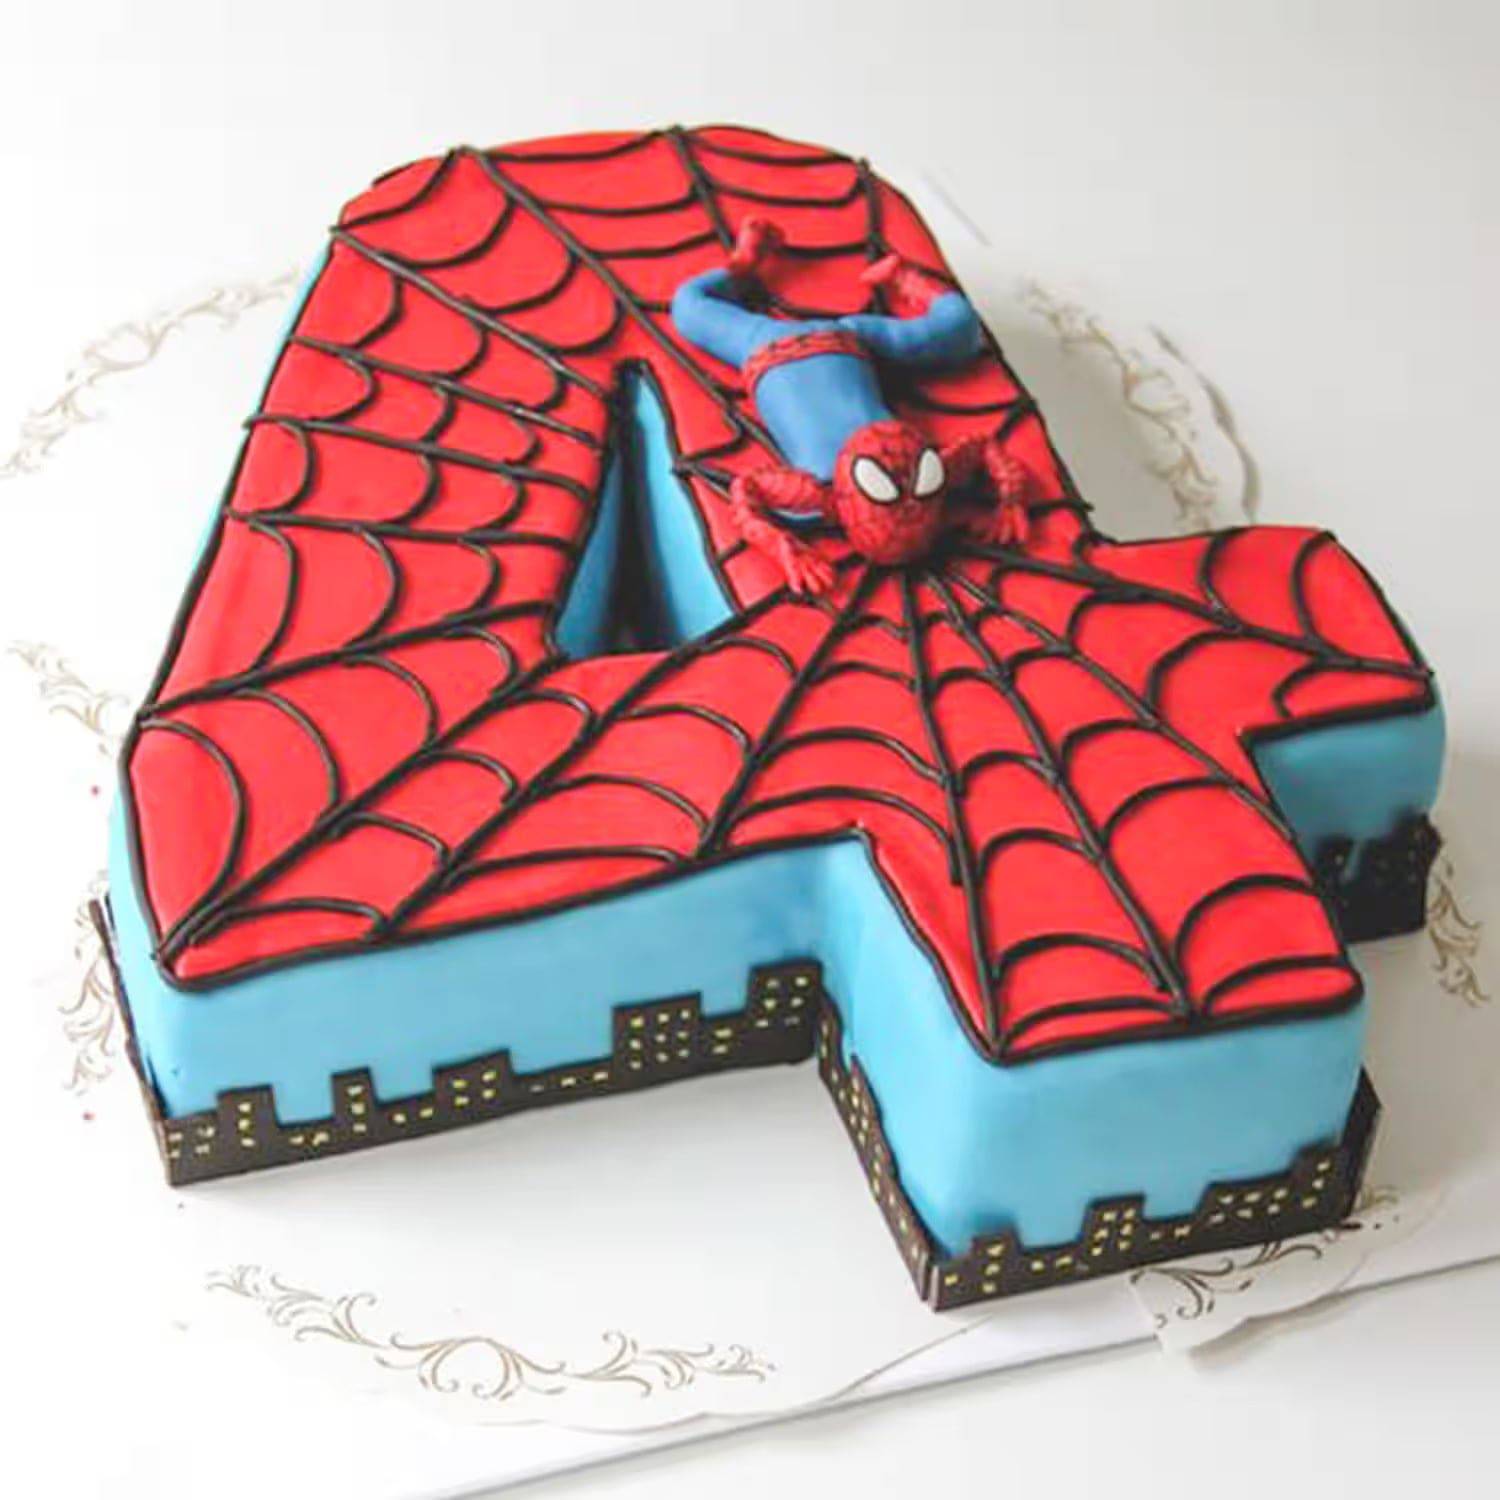 Spiderman 4 Number Cake - YuvaFlowers